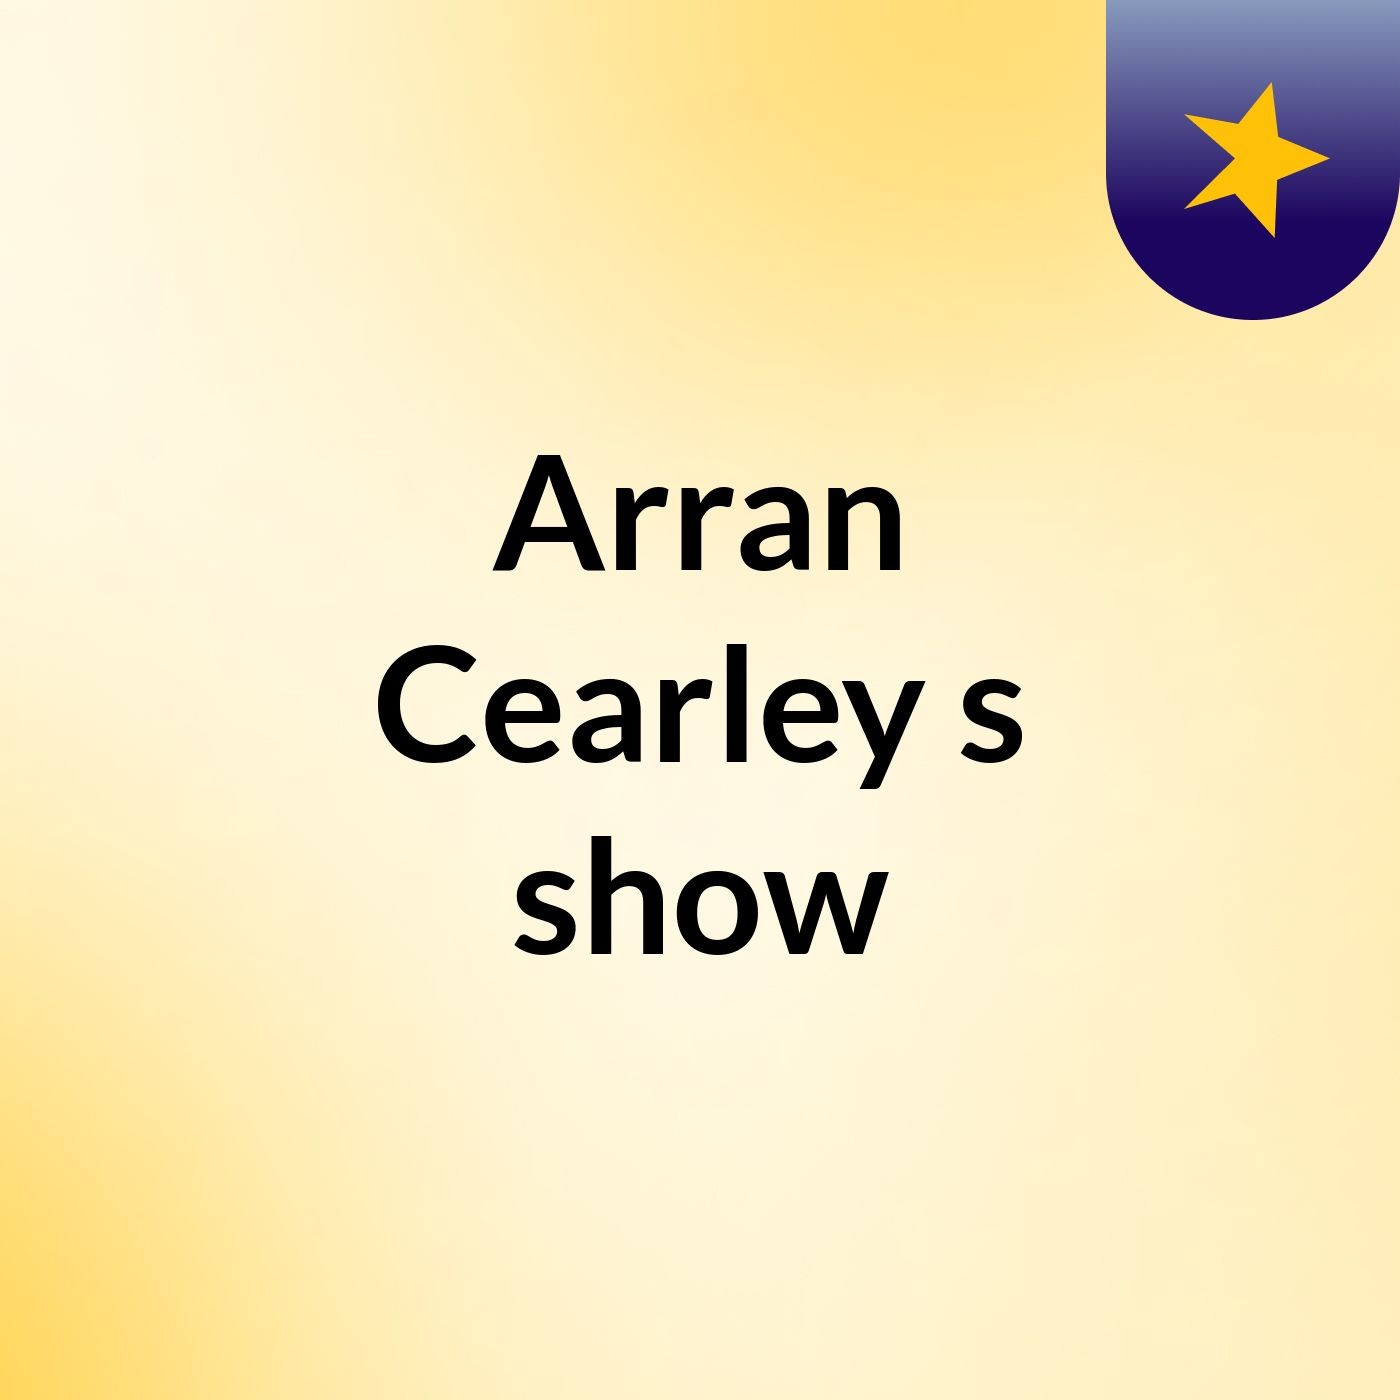 Arran Cearley's show